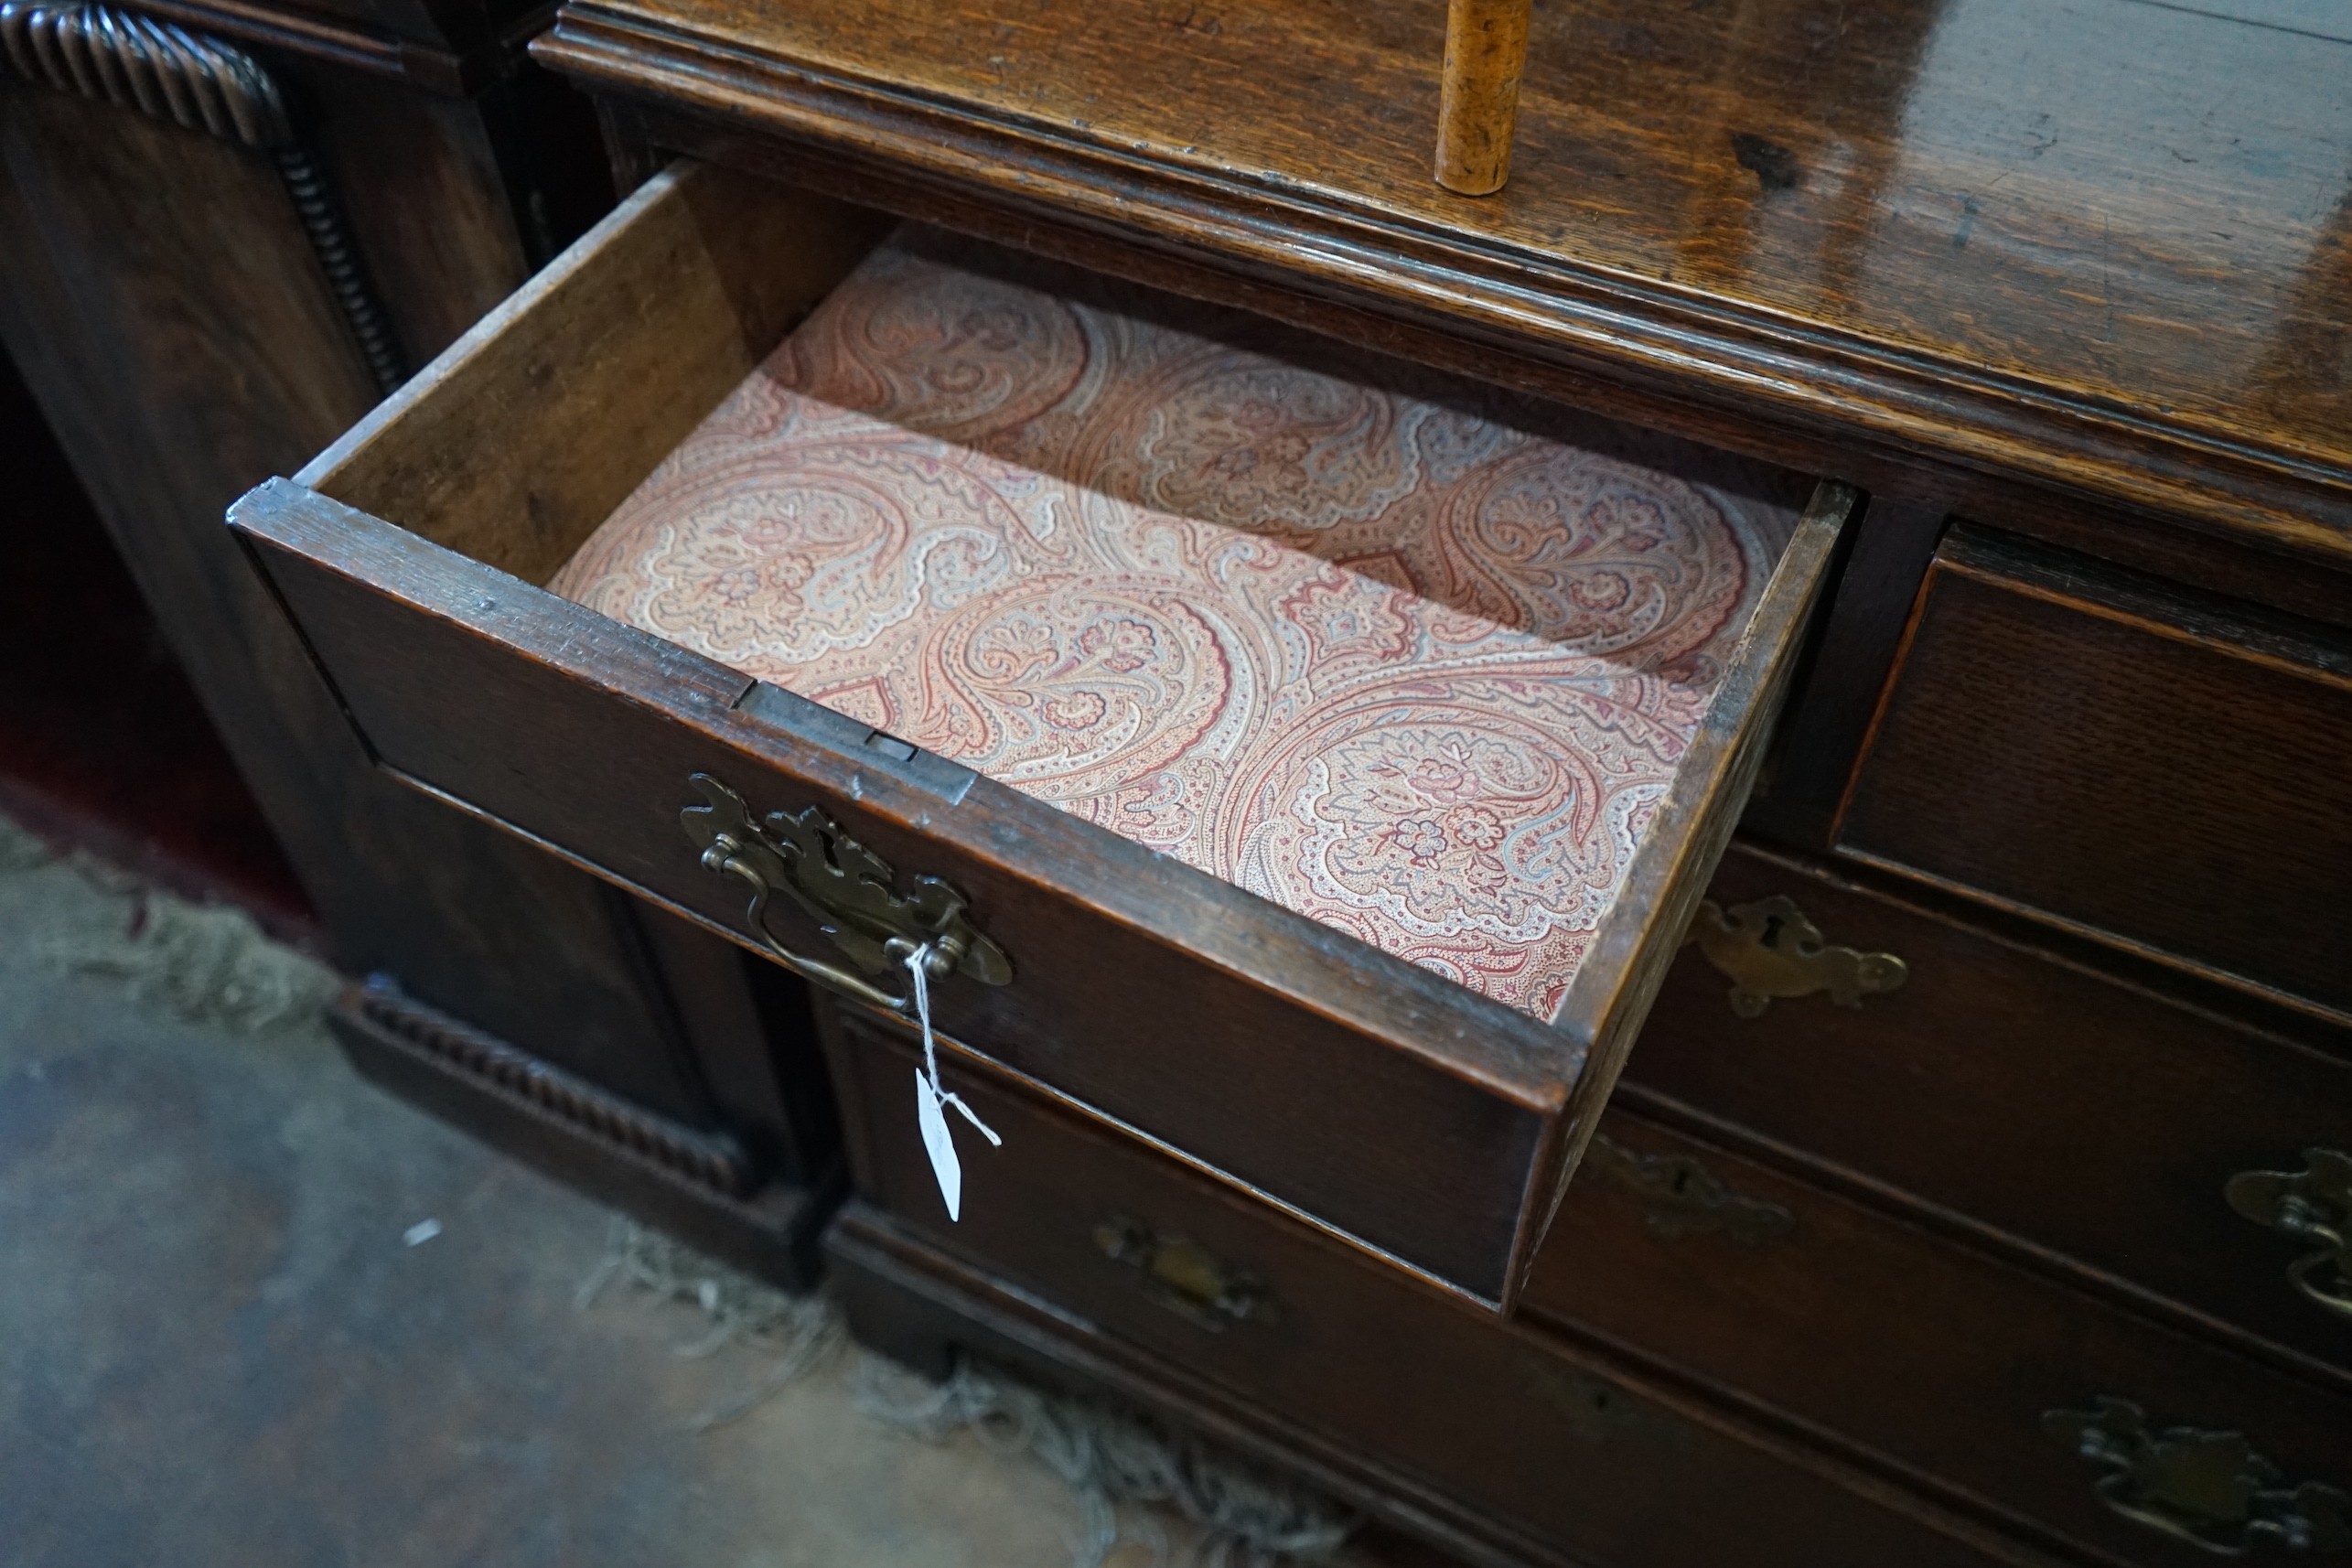 A George III oak chest of drawers, width 94cm, depth 49cm, height 95cm